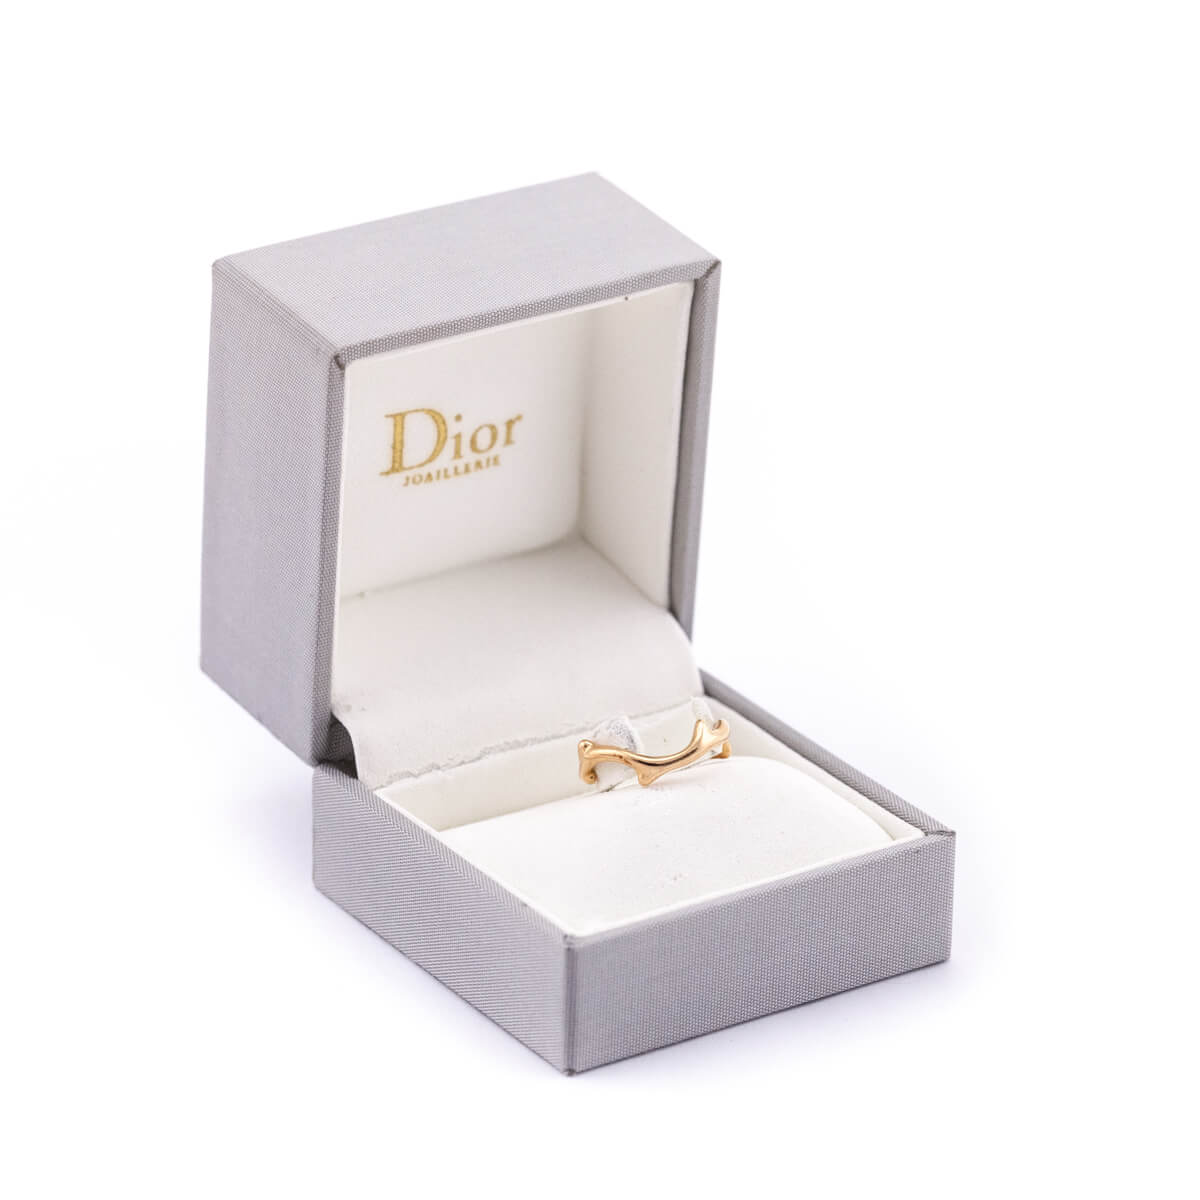 Dior 18K Rose Gold Bois de Rose Ring Size 4.5 - Love that Bag etc - Preowned Authentic Designer Handbags & Preloved Fashions